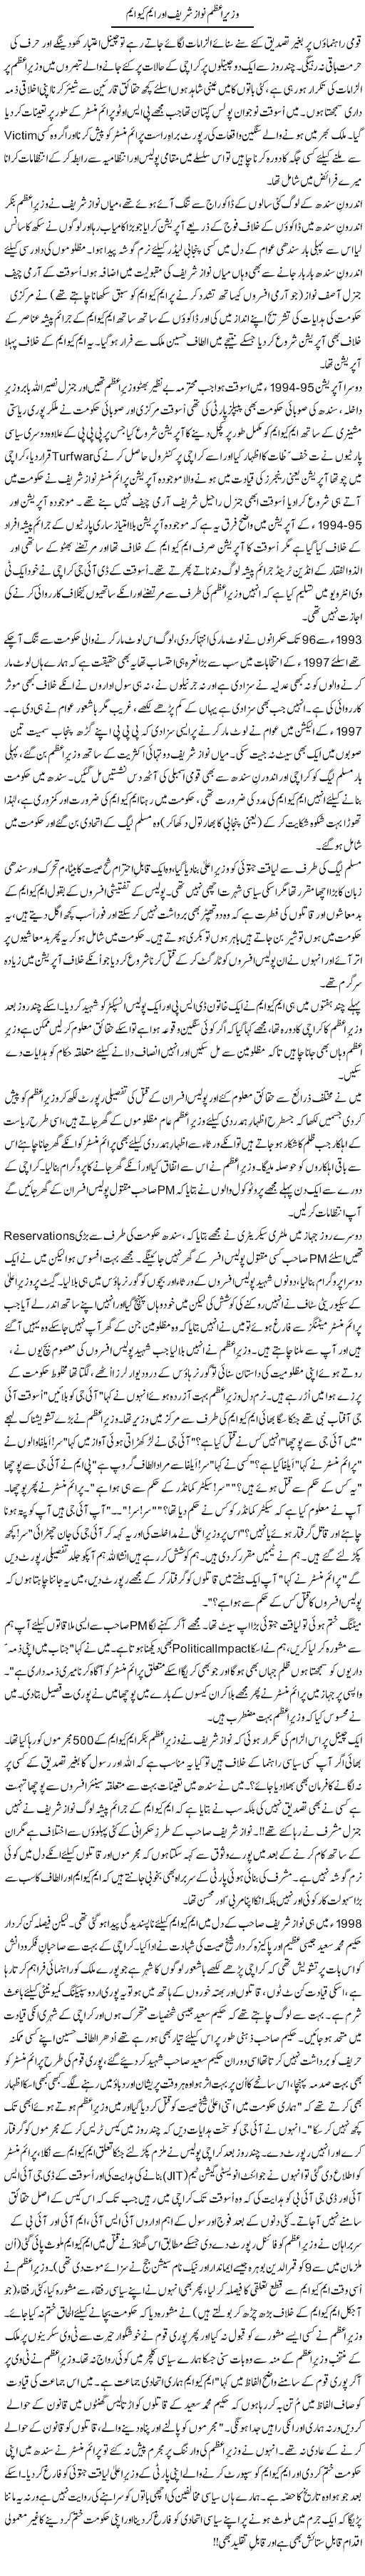 Wazeer e Azam Nawaz Sharif Aur MQM | Zulfiqar Ahmed Cheema | Daily Urdu Columns